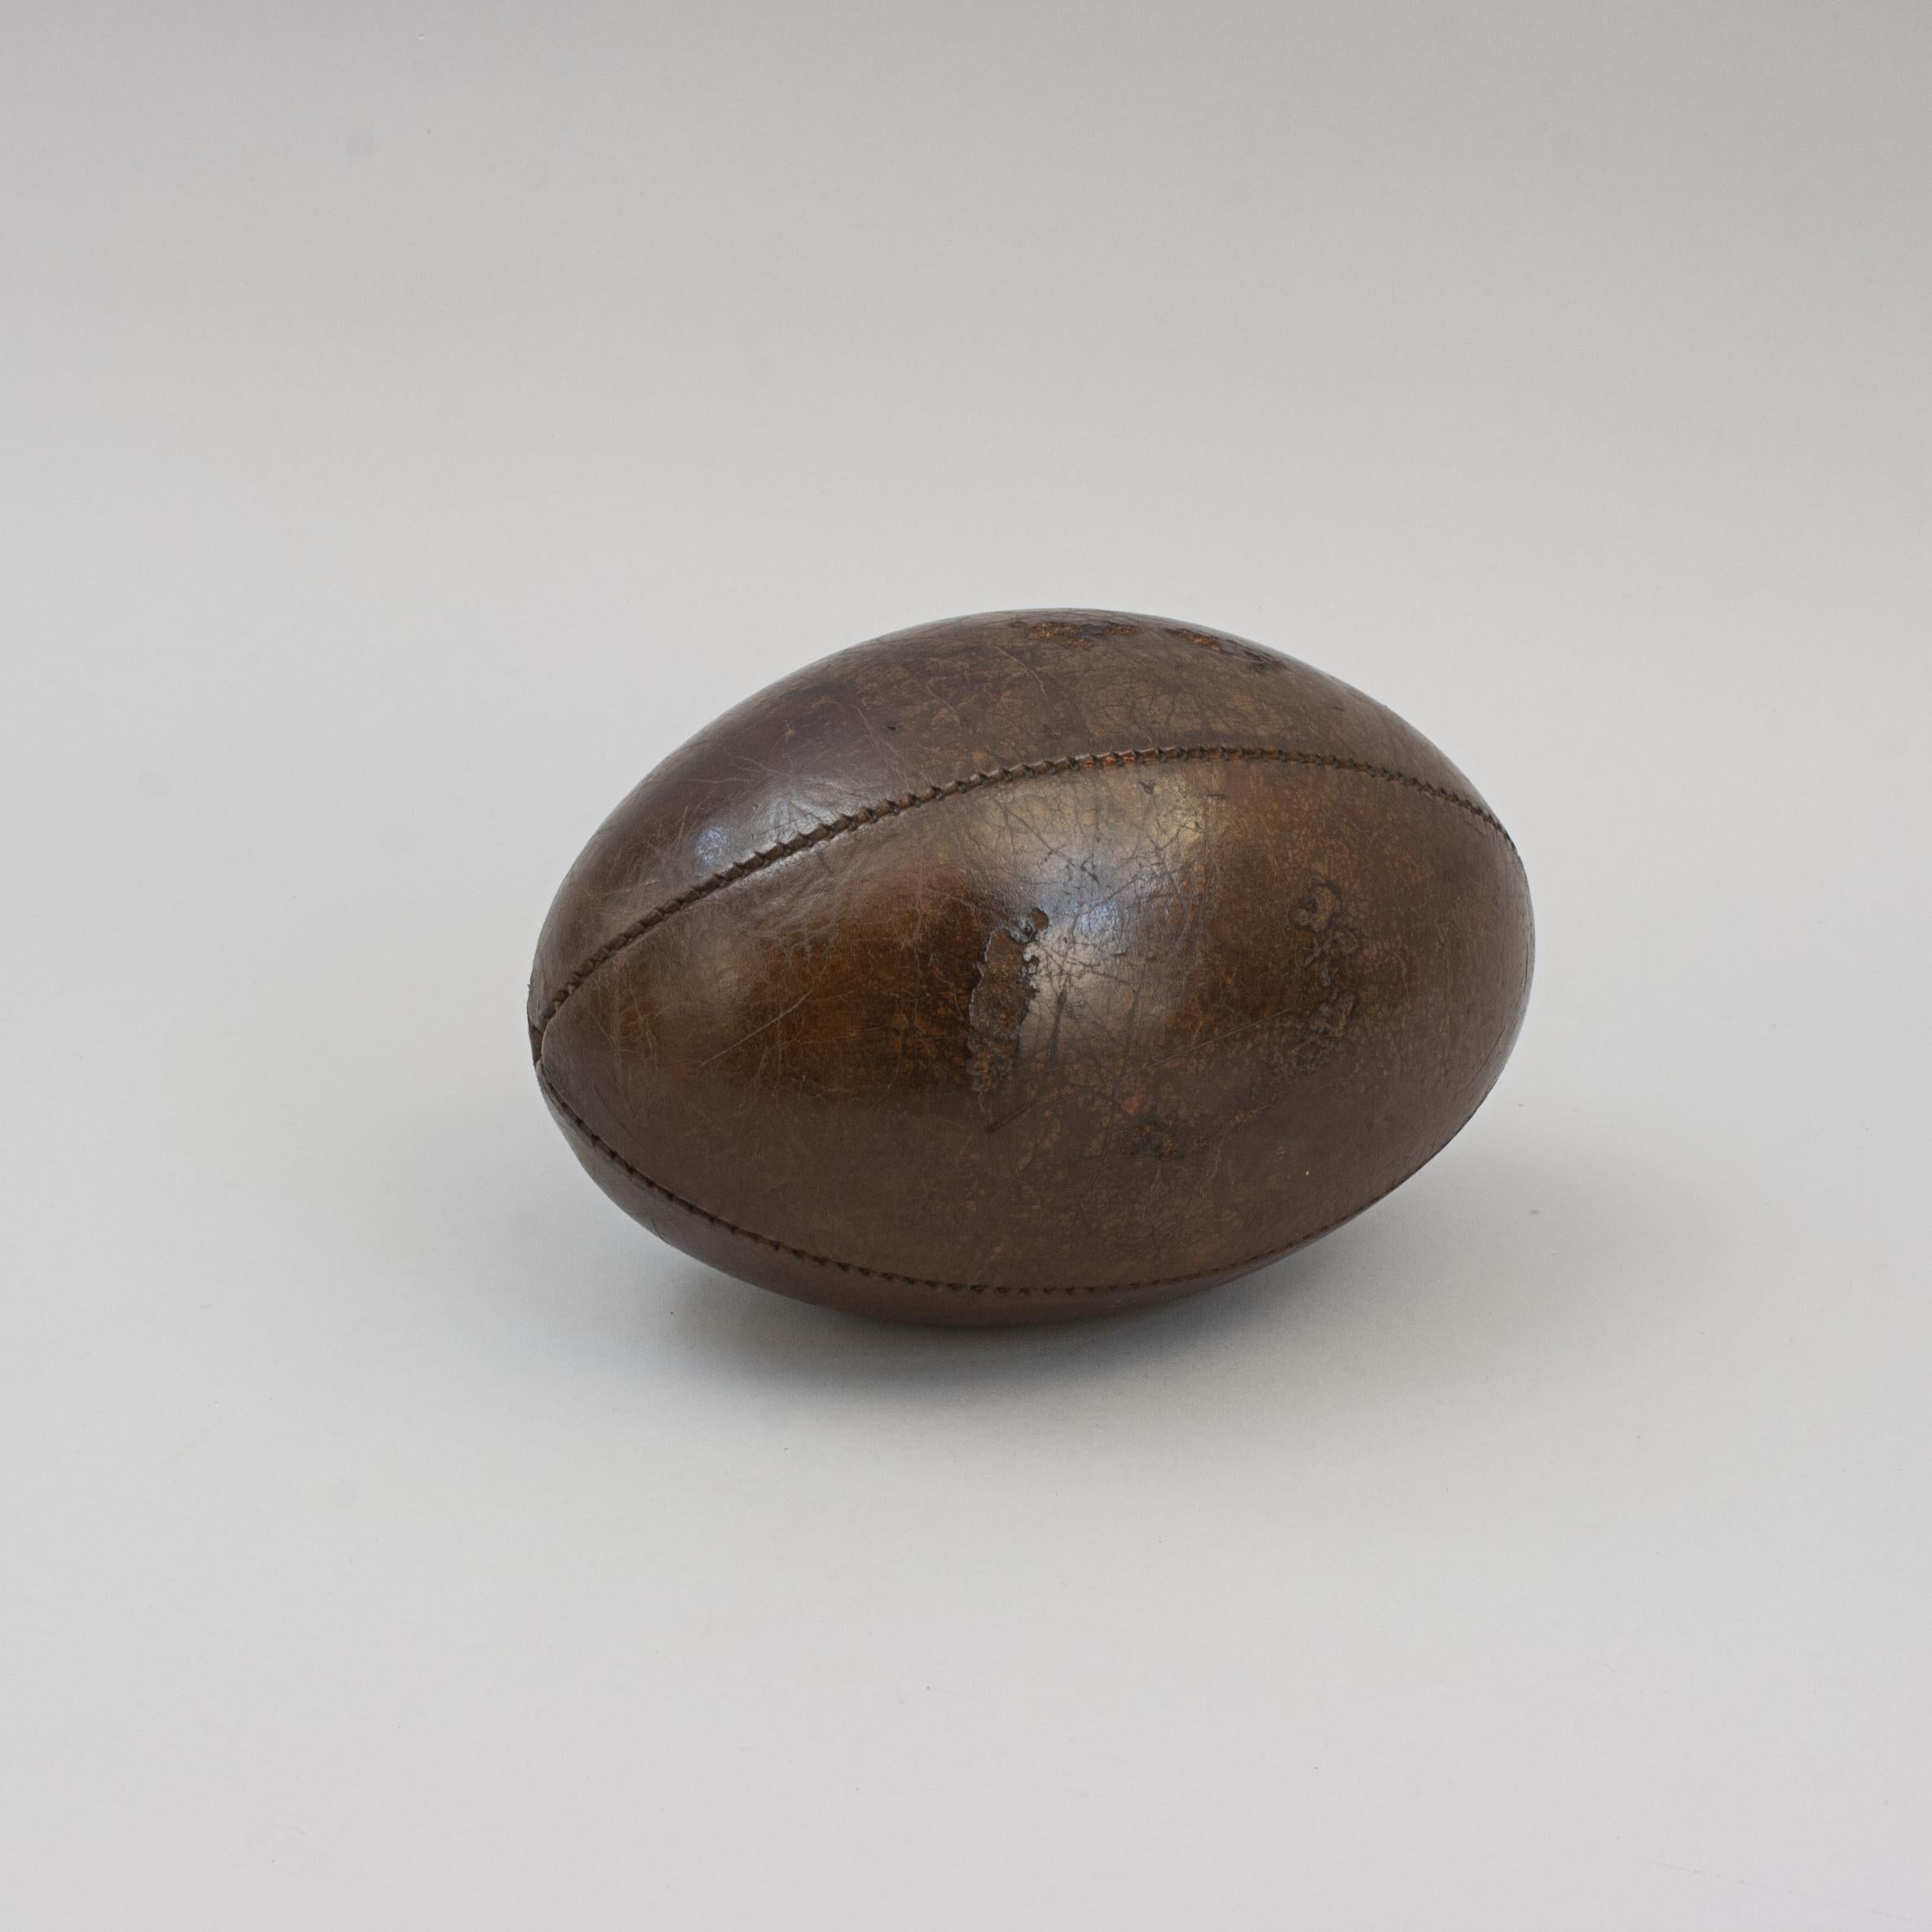 original rugby ball